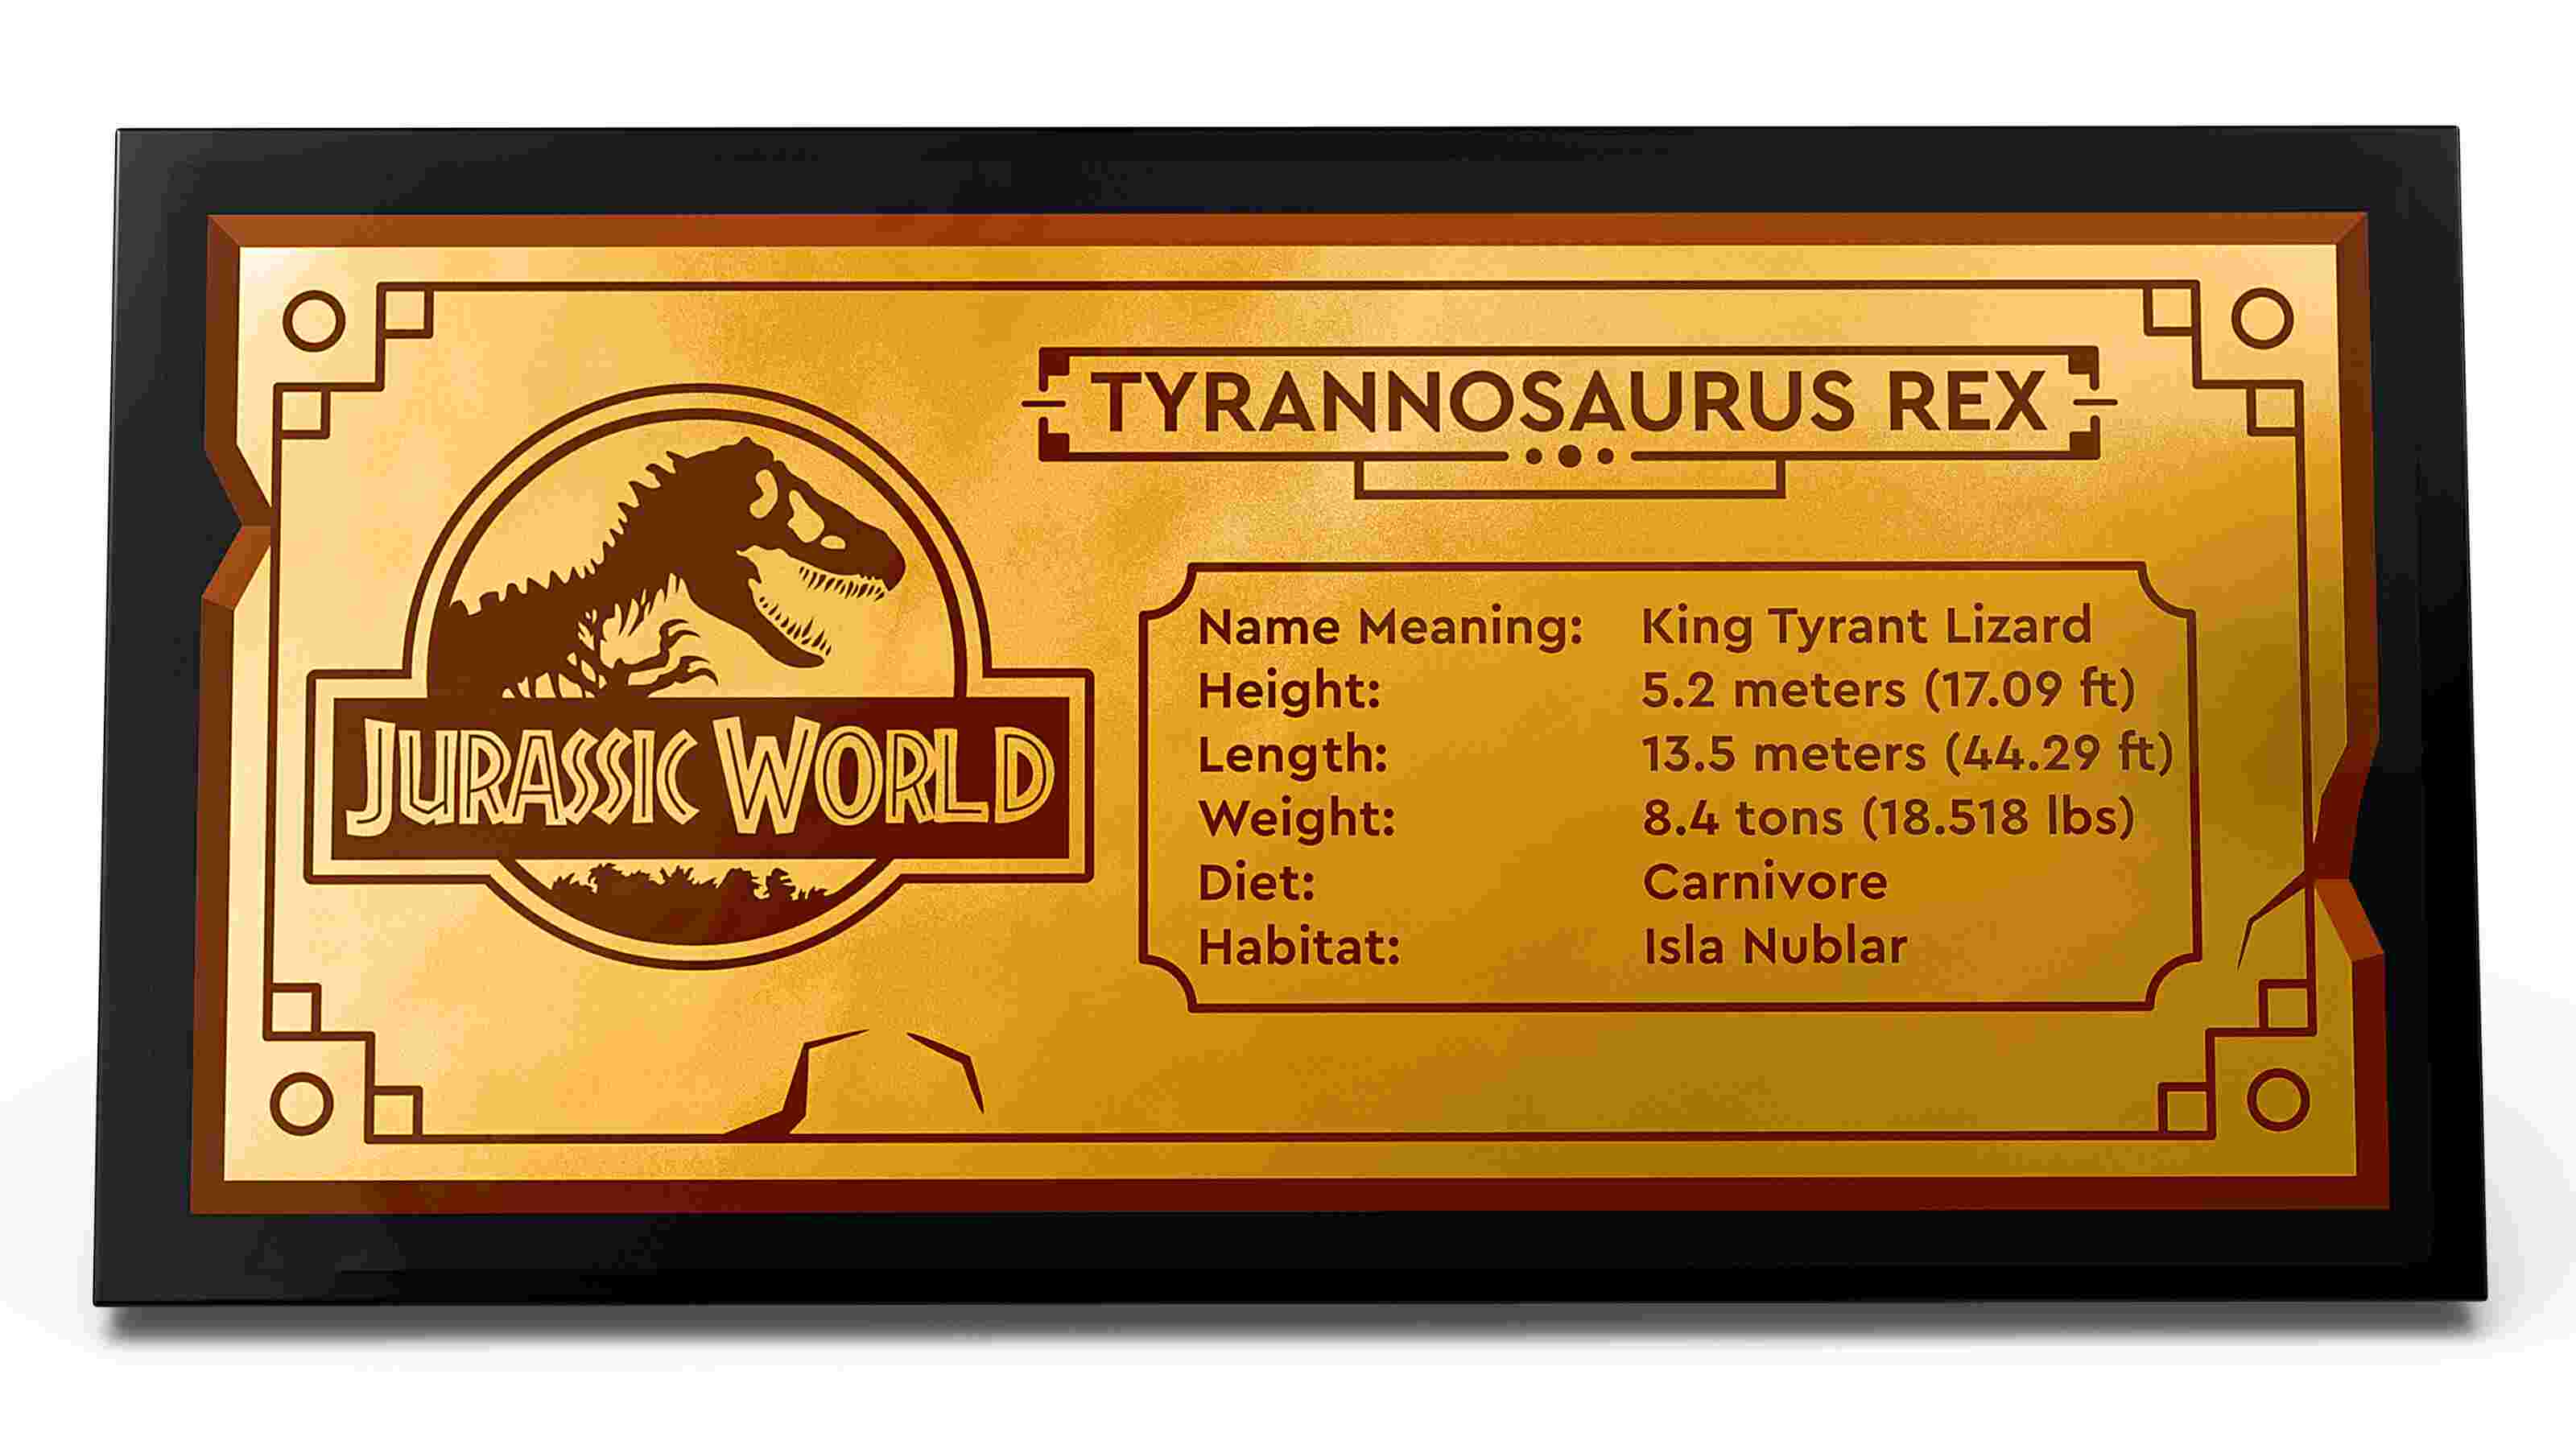 LEGO 76964 Jurassic World Dinosaurier-Fossilien: T.-rex-Kopf, Fußabdruck